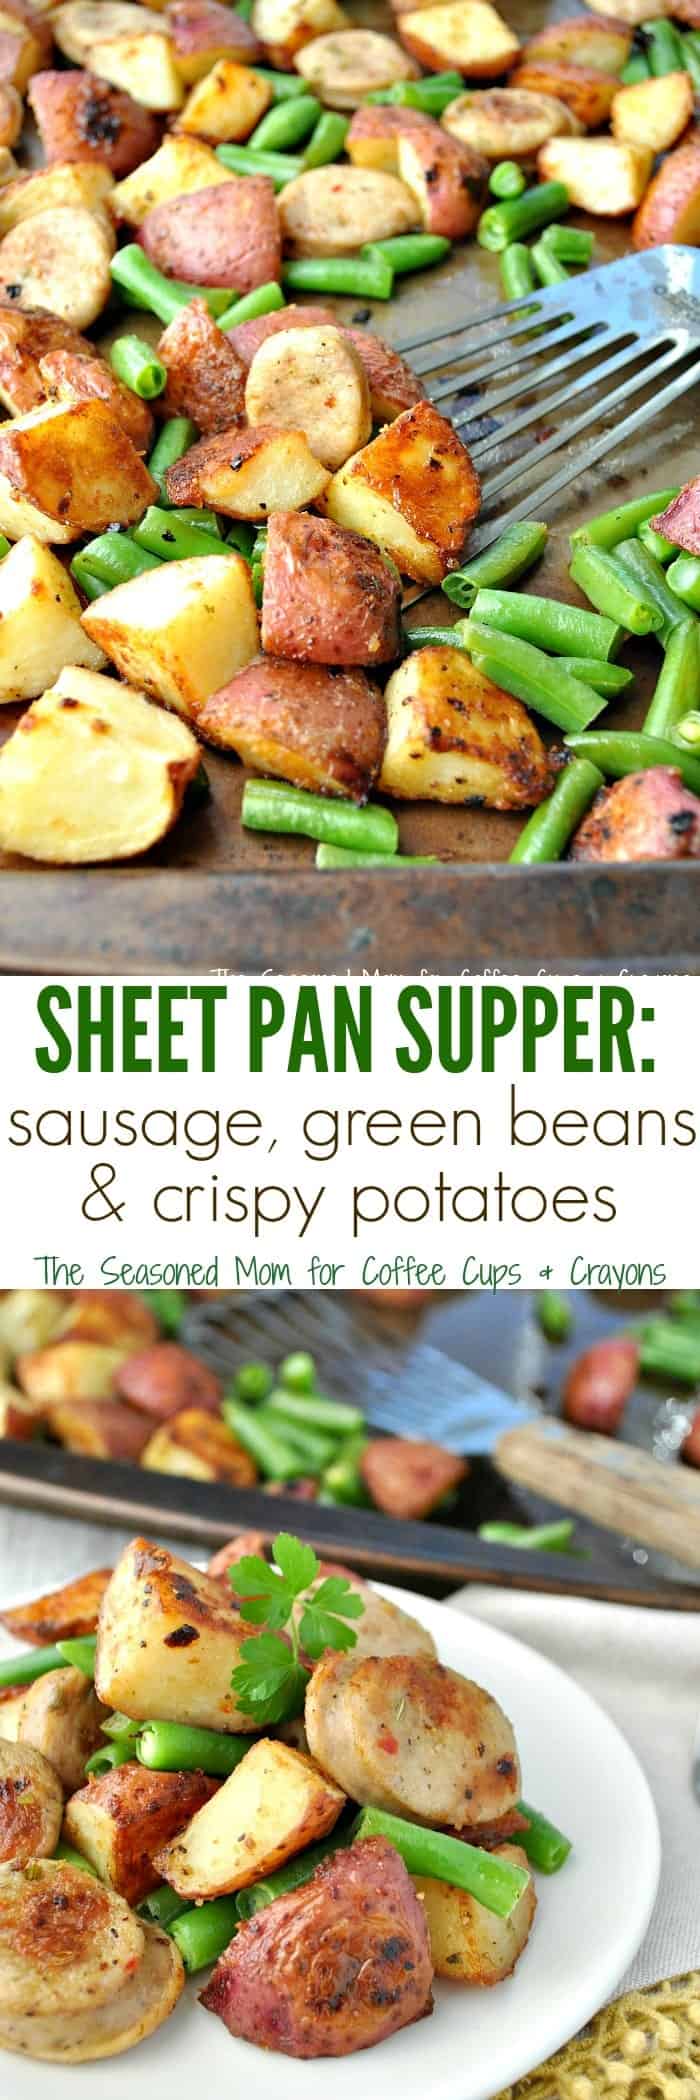 Sheet Pan Supper Sausage Potato Green Beans